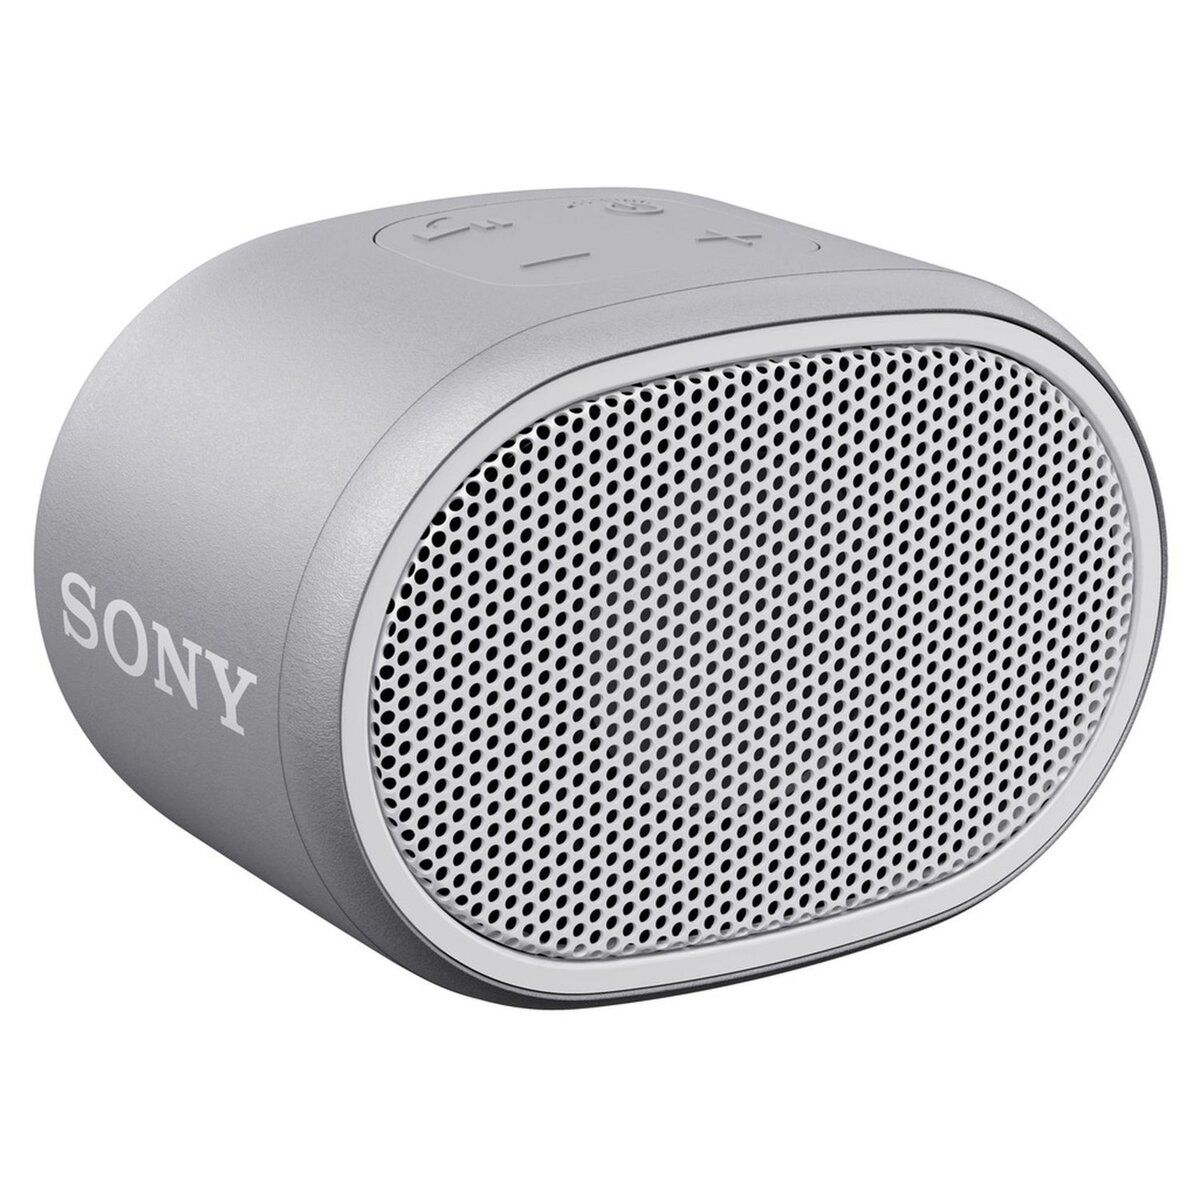 SONY Enceinte portable Bluetooth - Blanc - SRS-XB01W